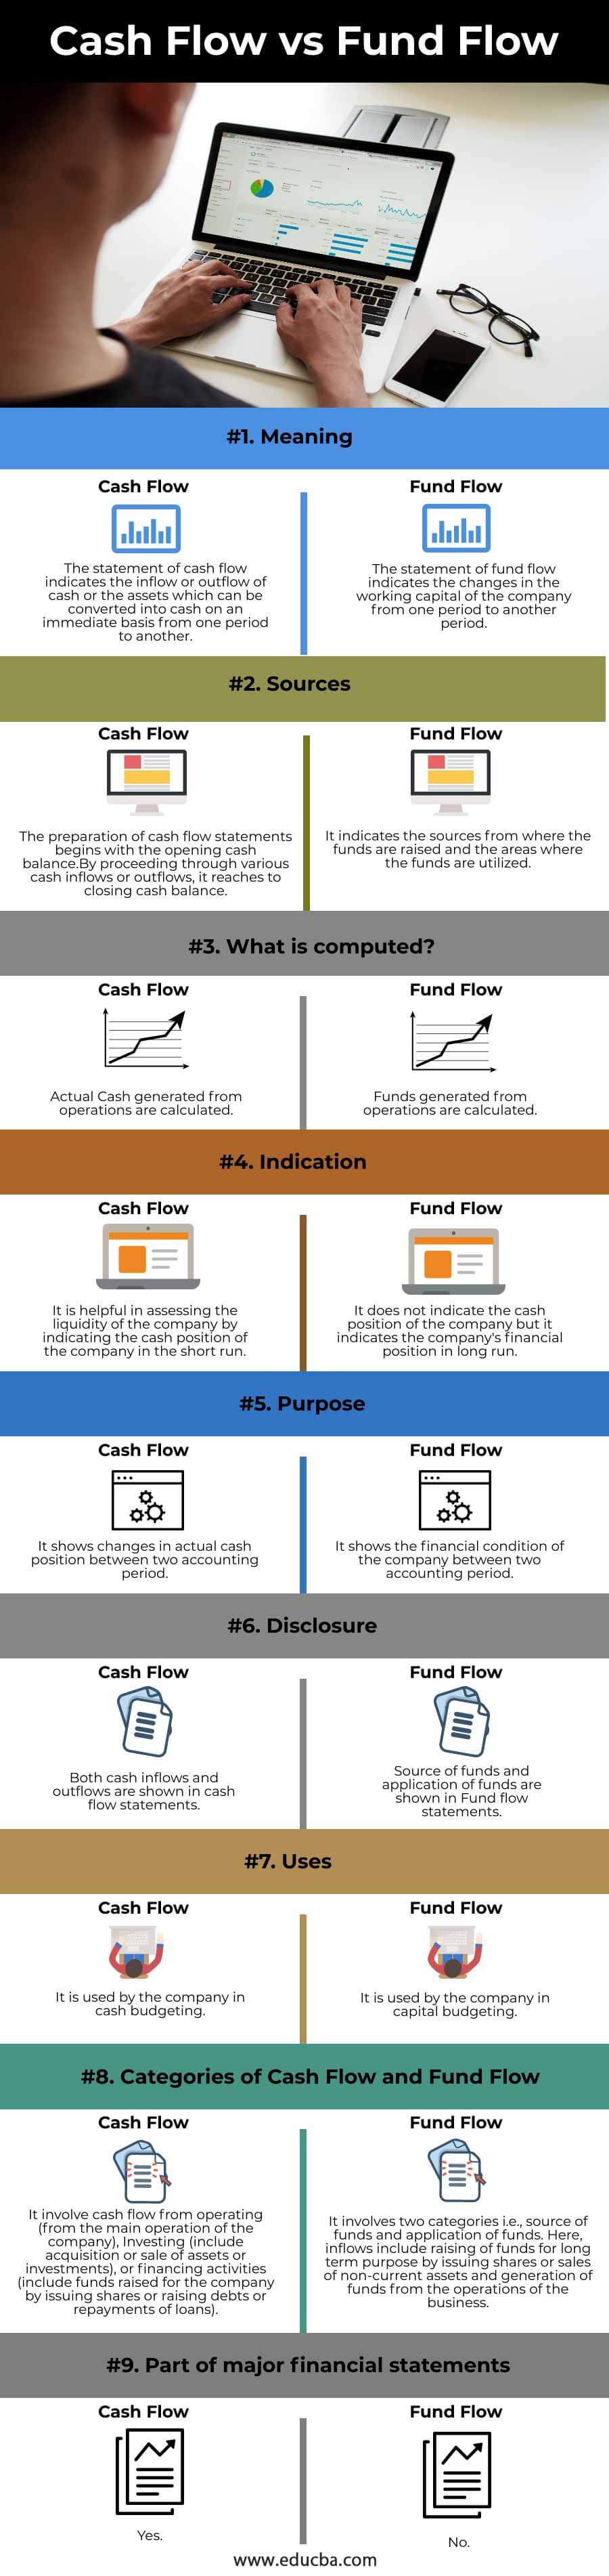 Cash-Flow-vs-Fund-Flow-info